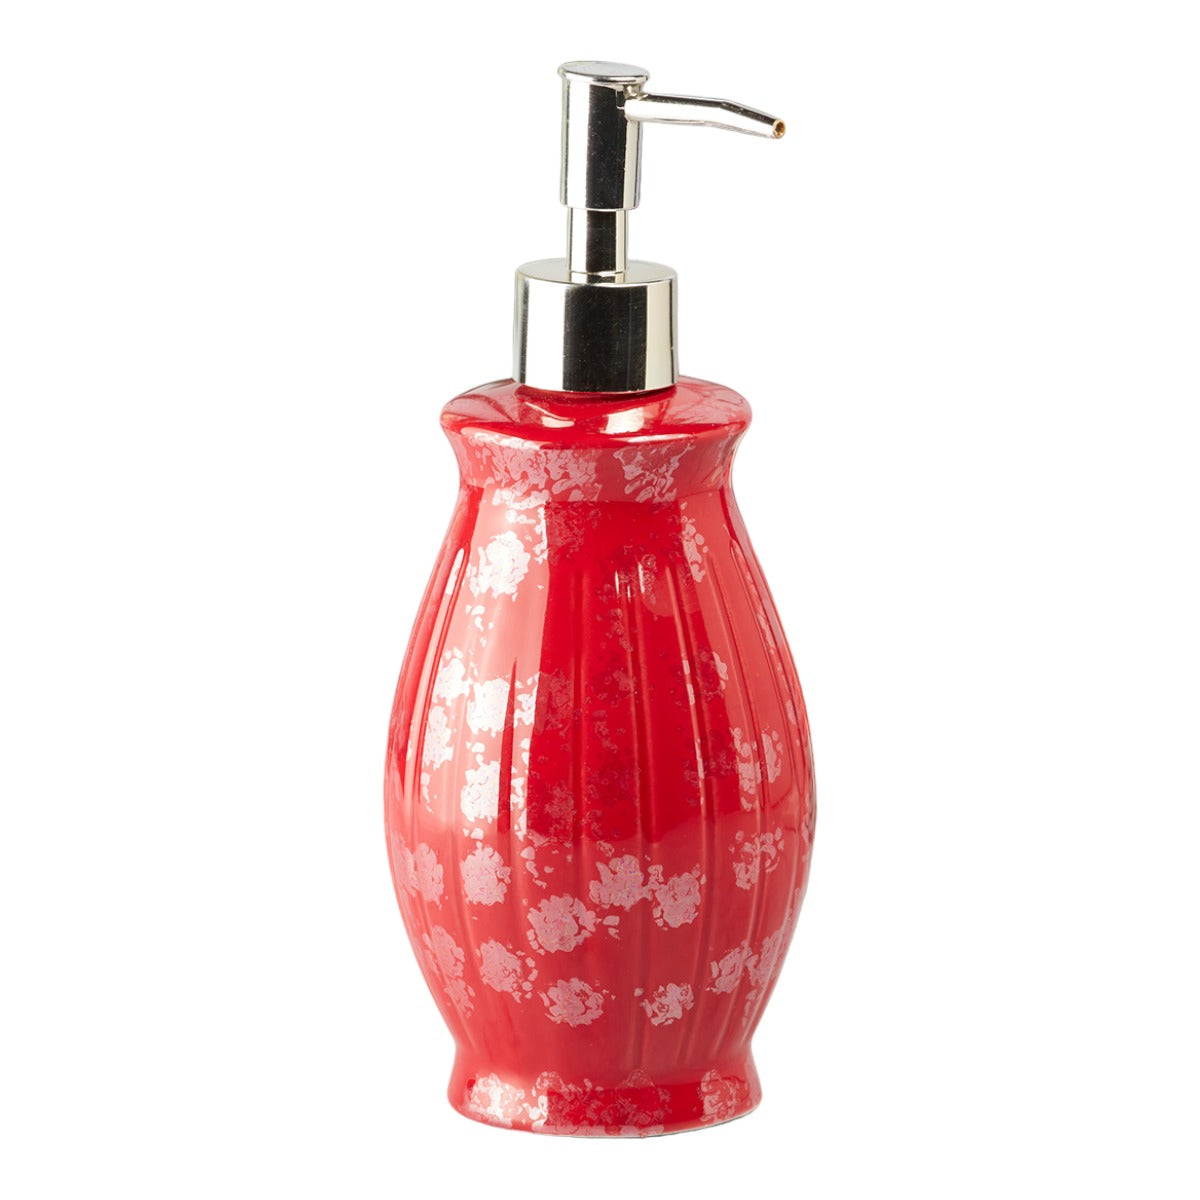 Ceramic Soap Dispenser handwash Pump for Bathroom, Set of 1, Red (8006)